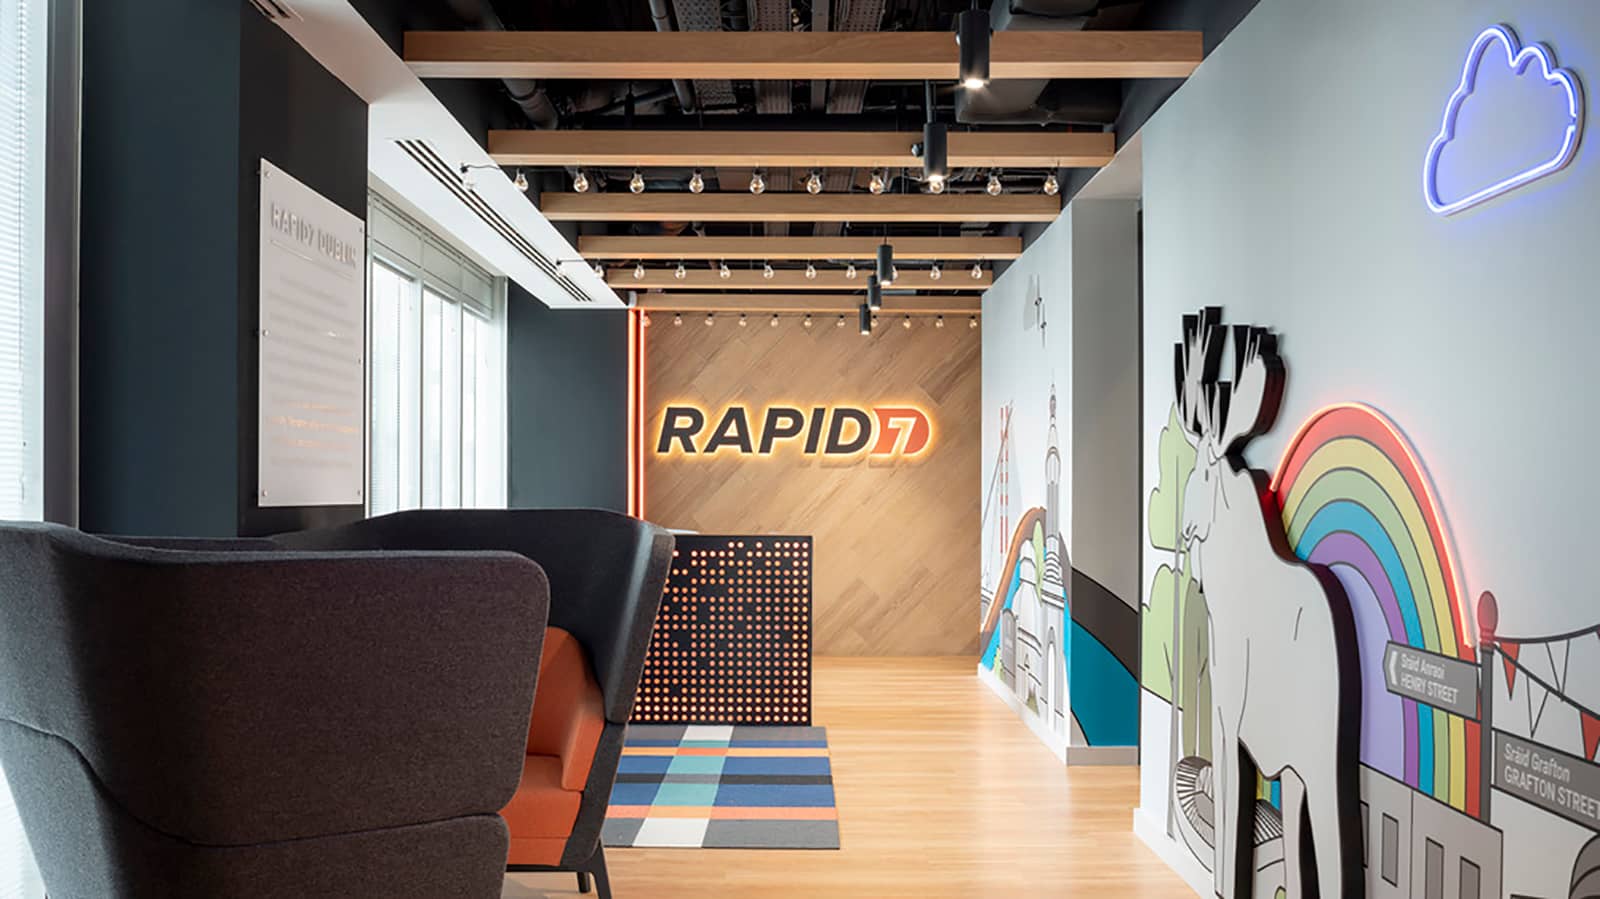 The reception area at Rapid7's Dublin office